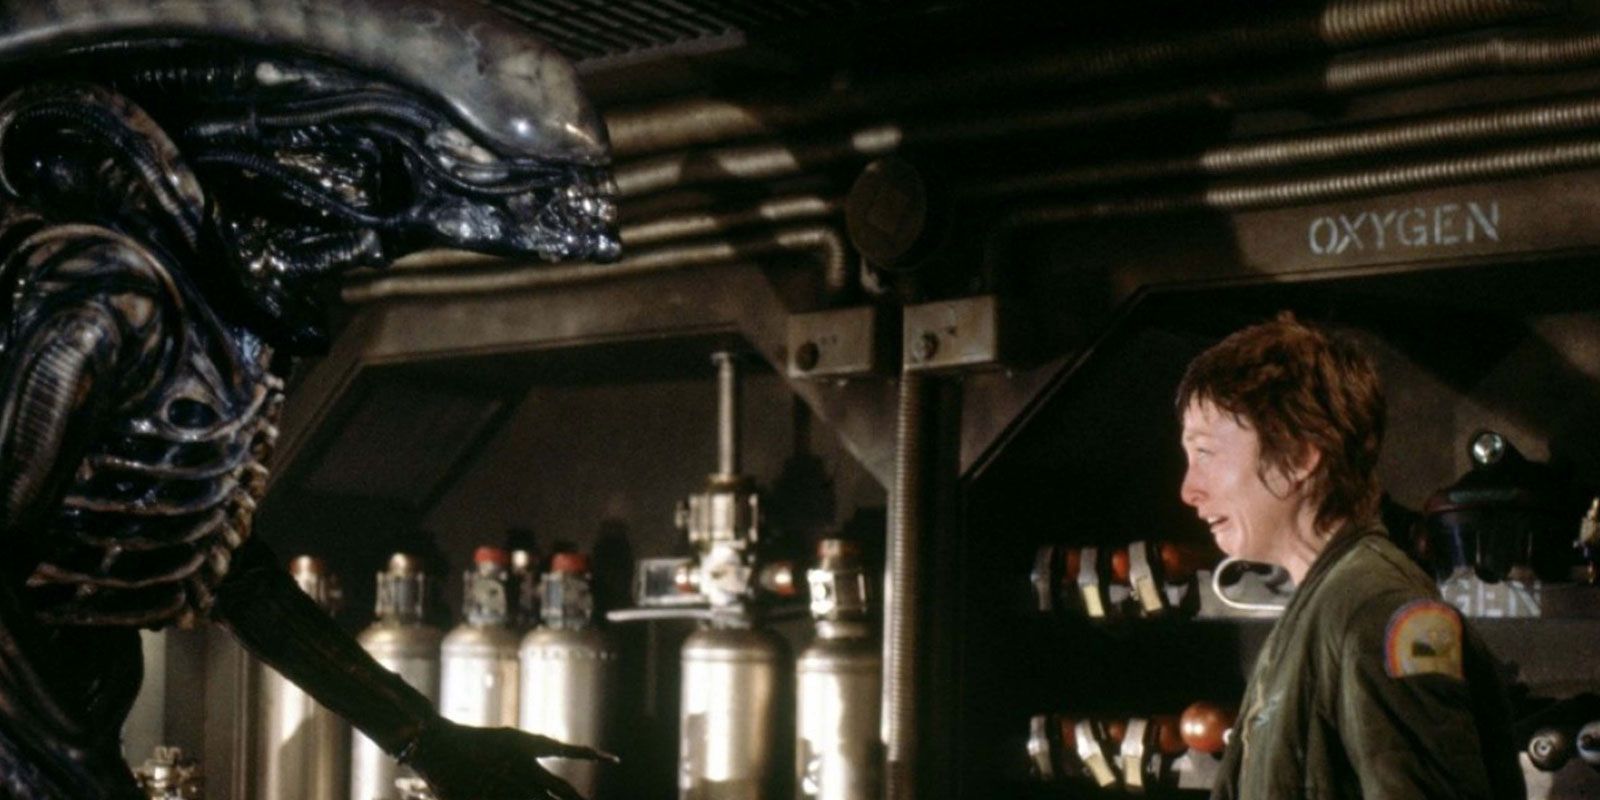 From the original Alien movie, Lambert being cornered by the xenomorph